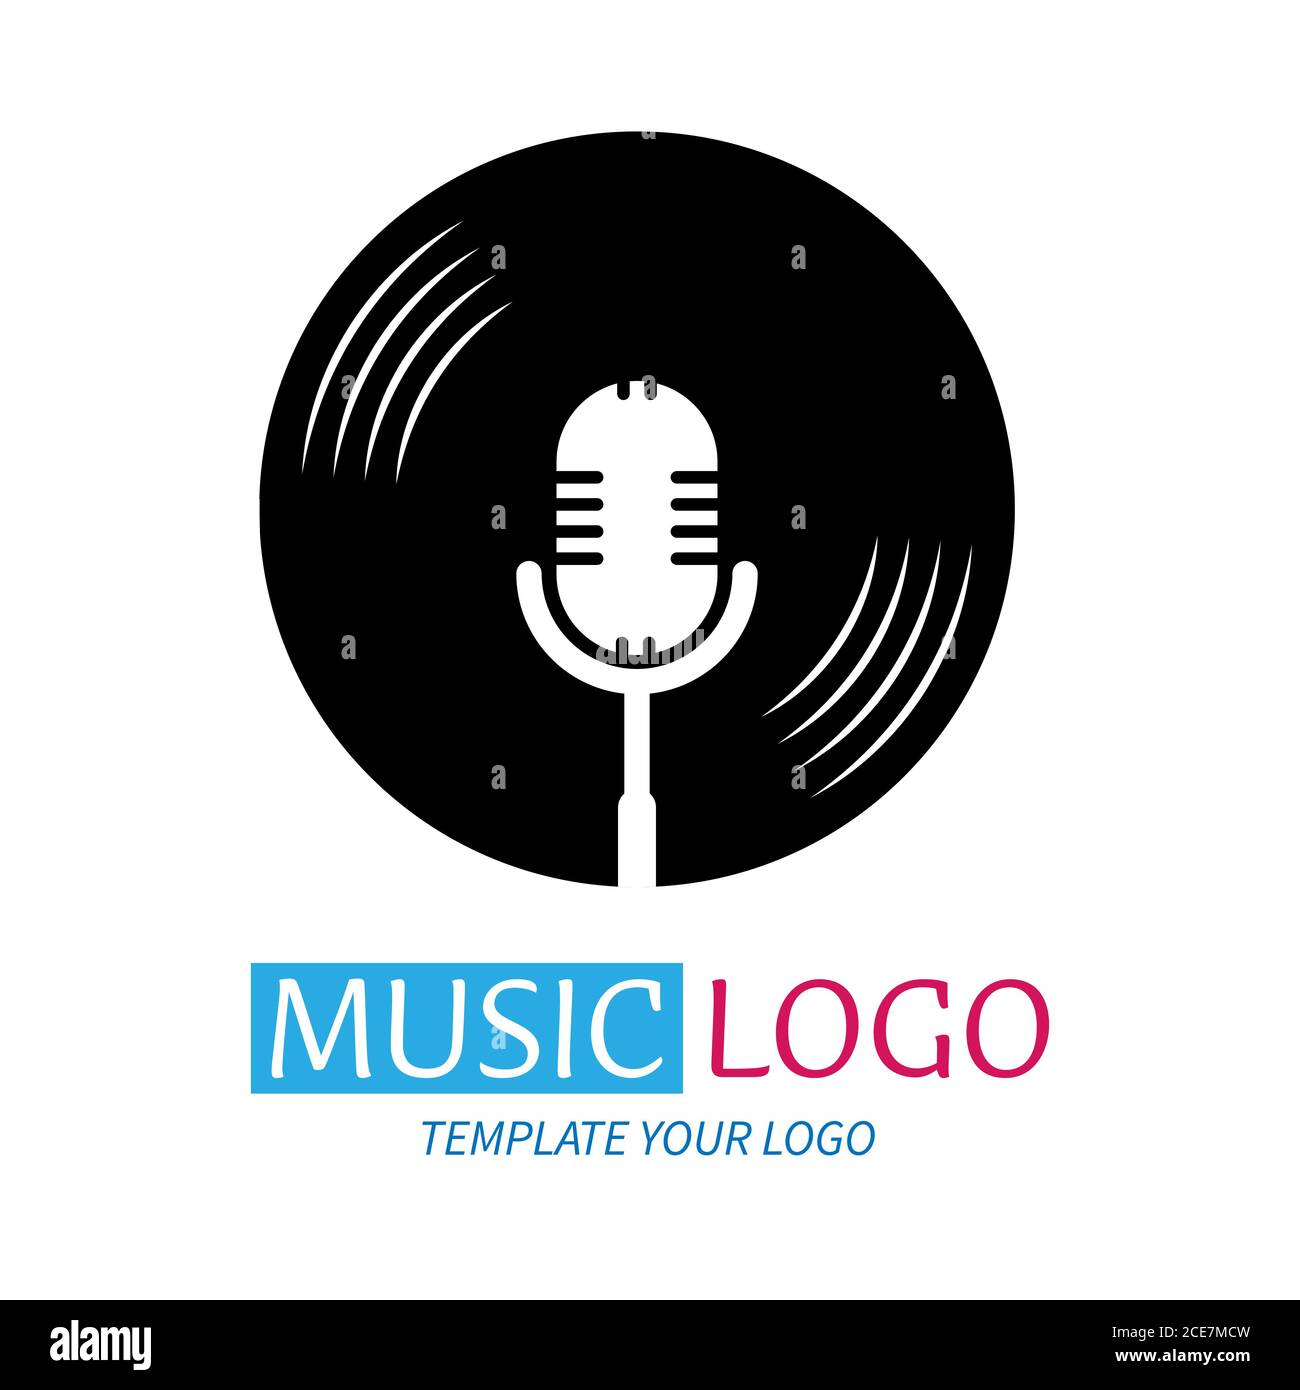 Music logo. Color vector illustration for logo, sticker or label, modern design isolated on white background Stock Vector